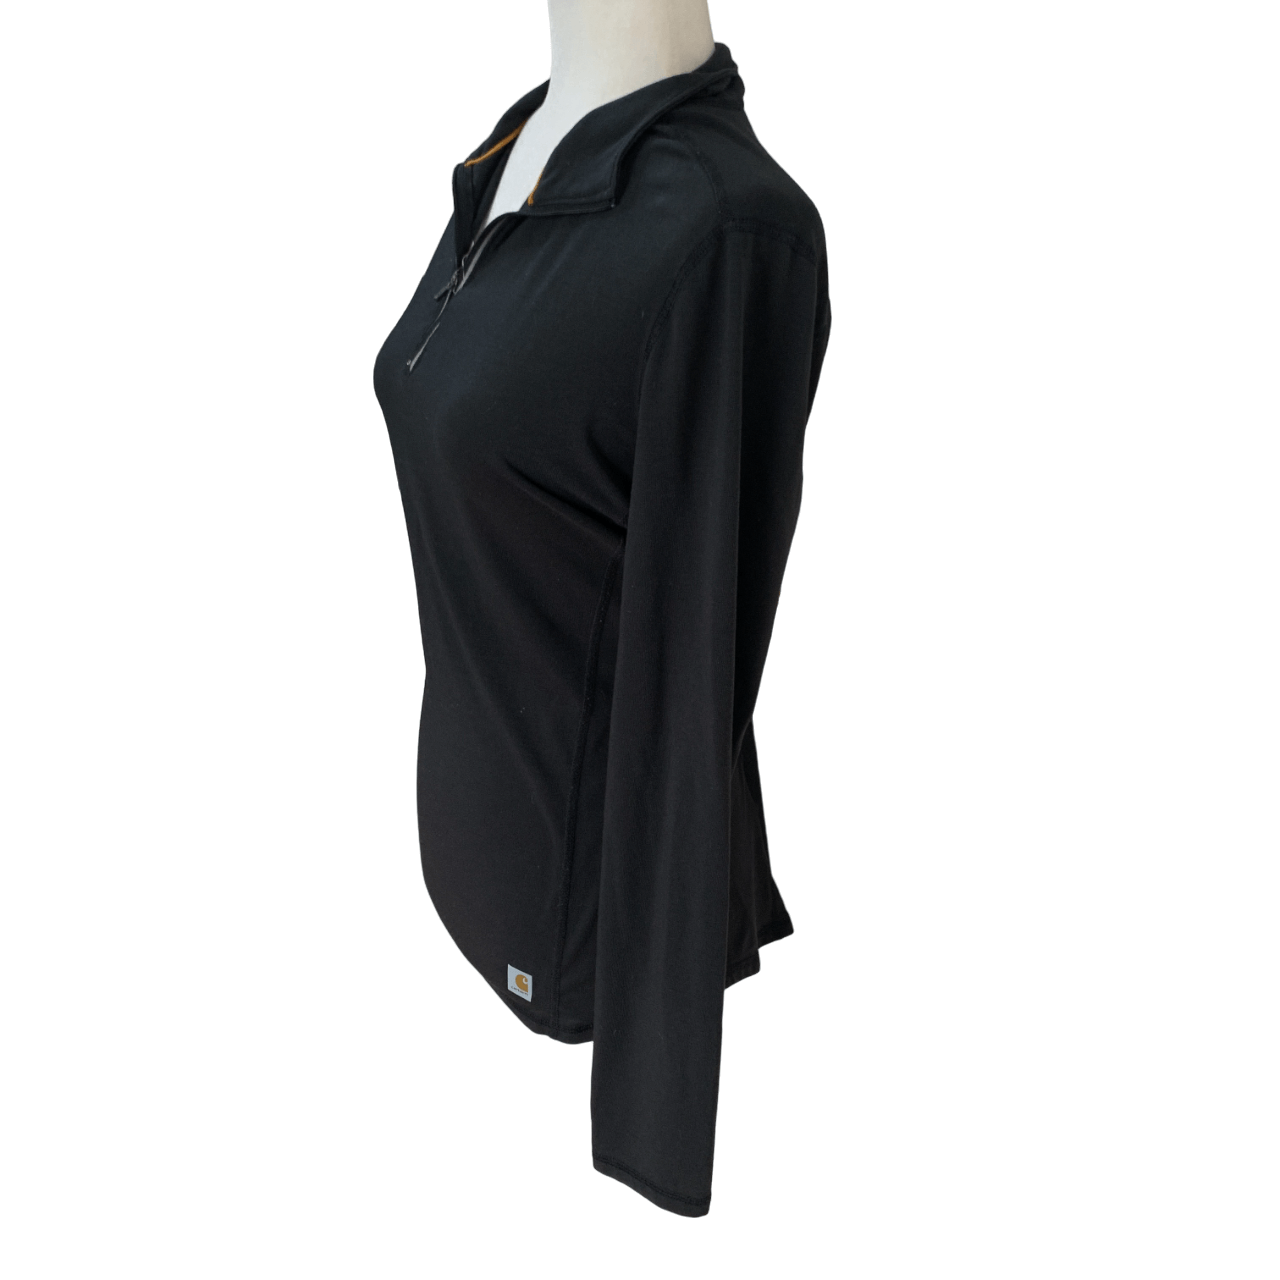 Carhartt Force 1/4 Zip Long Sleeve Shirt in Black - Woman's Medium (8-10)